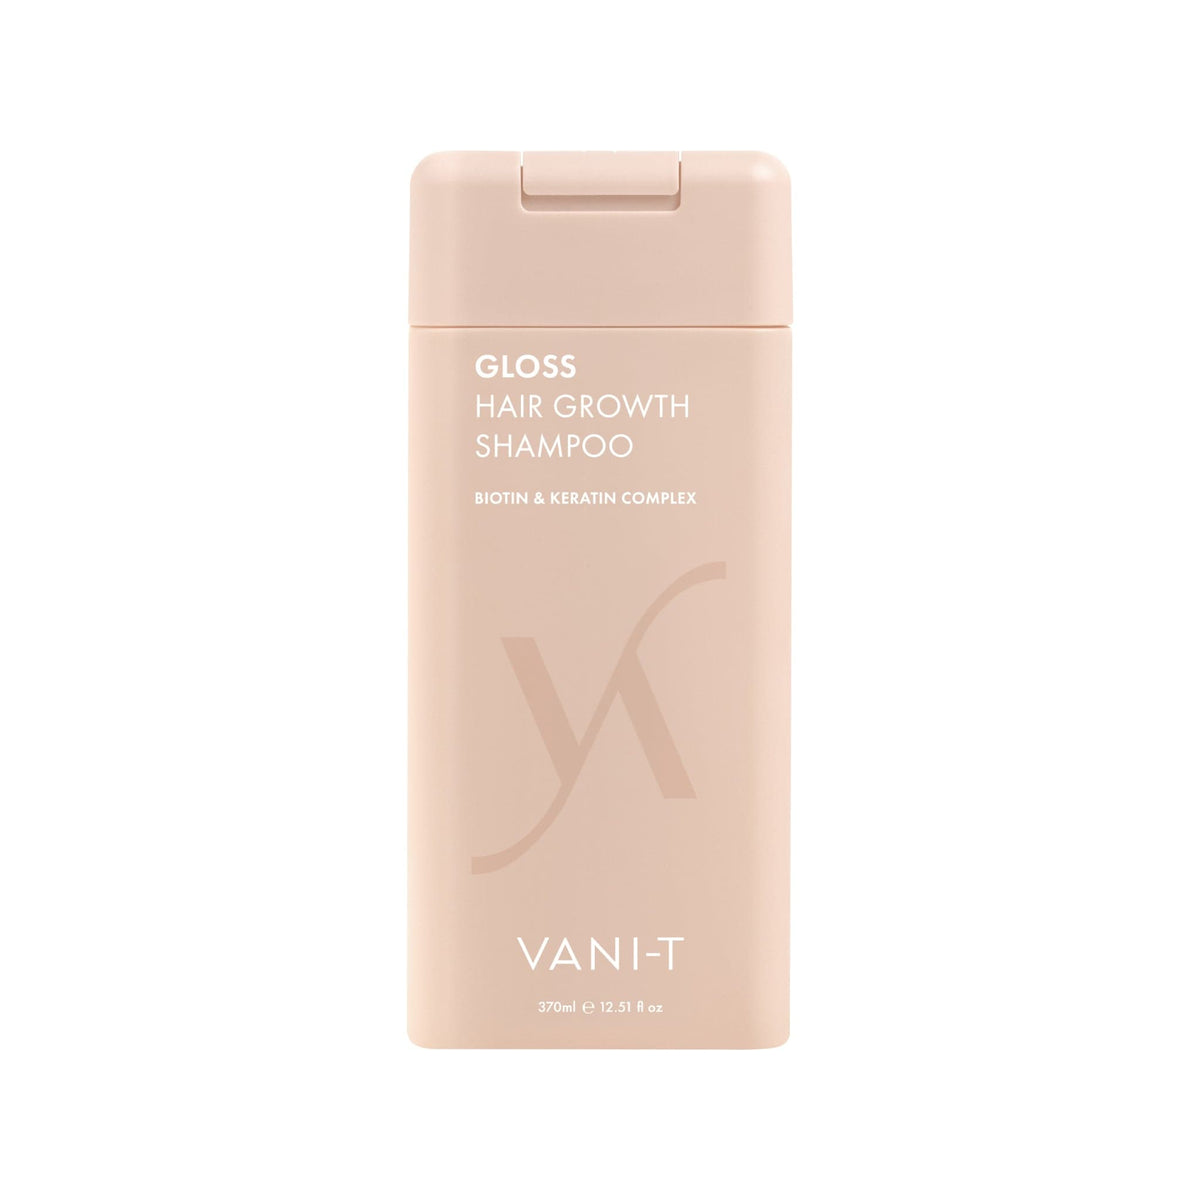 Vani-T Gloss Hair Growth Shampoo - 370ml 2055 Tanning - Vani-T - Luxe Pacifique